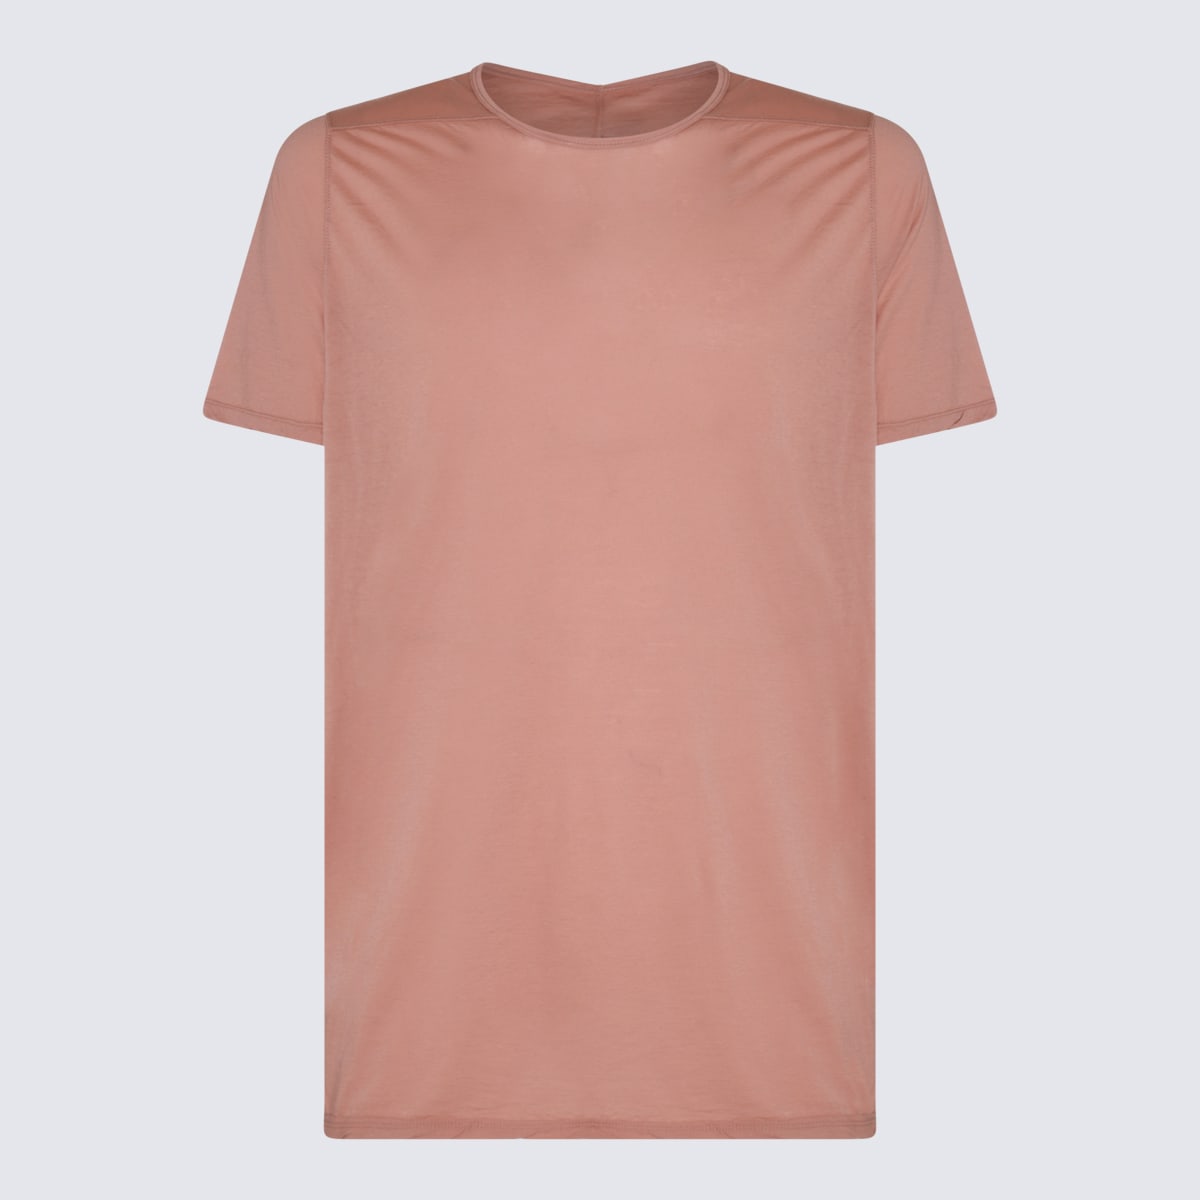 Drkshdw Pink Cotton T-shirt